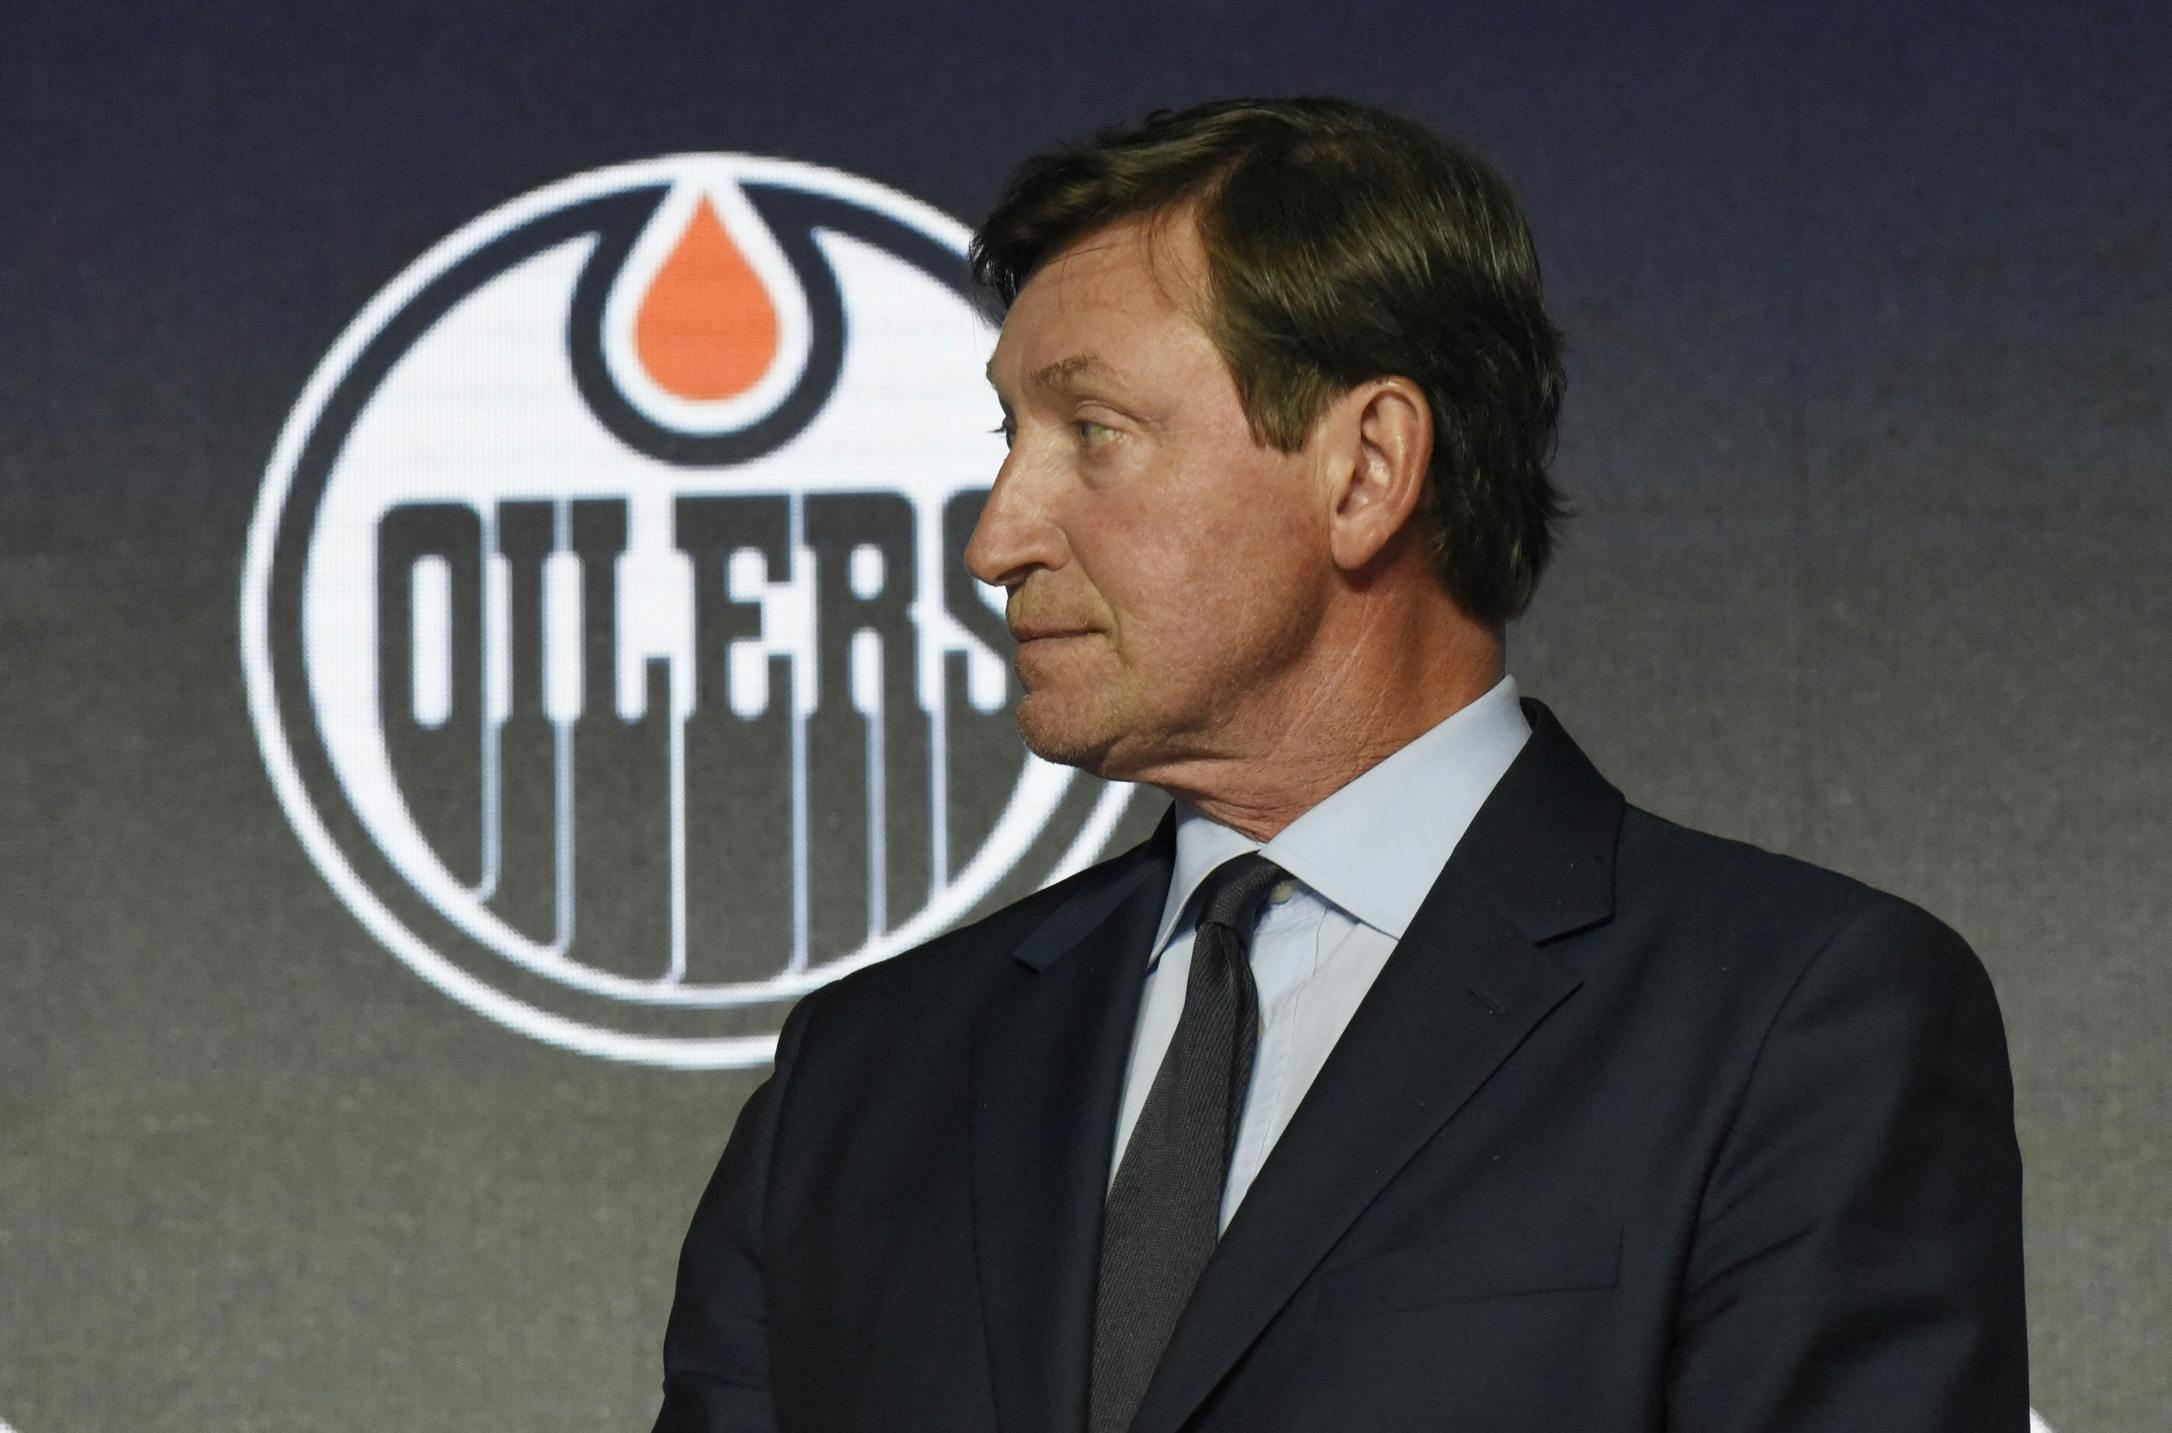 Long time coming': Wayne Gretzky rejoins Oilers as partner, vice